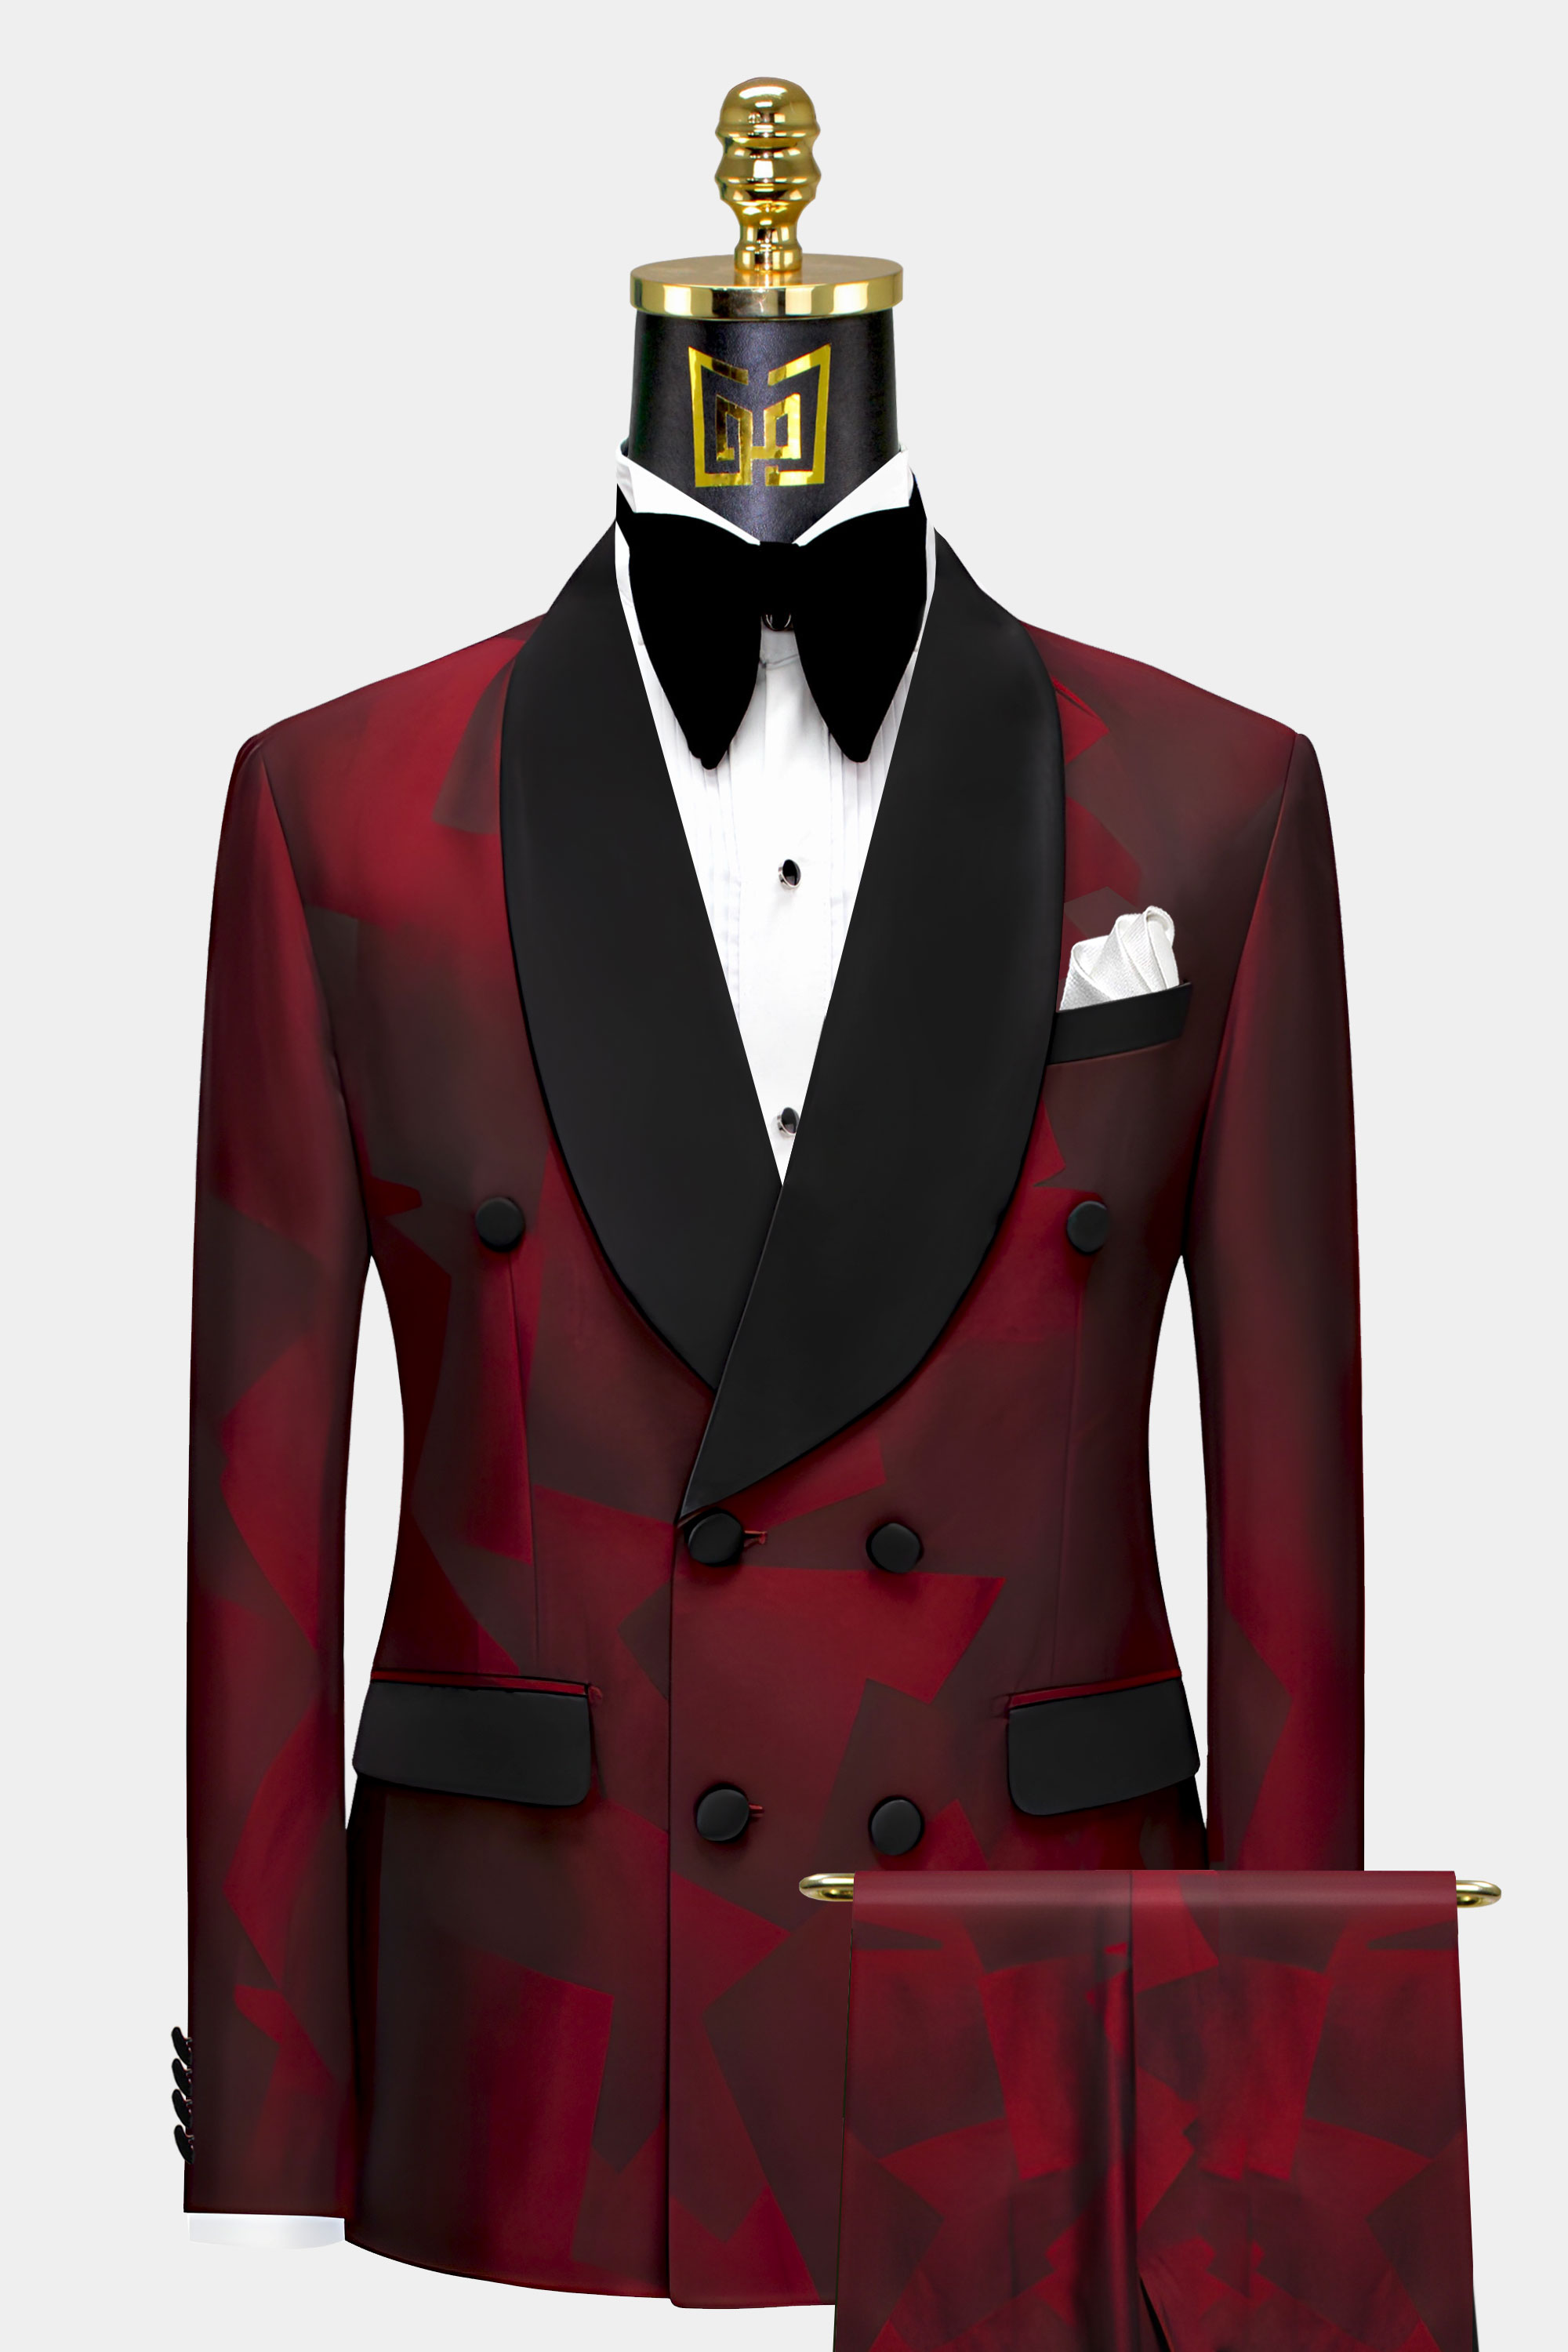 Maroon-and-Black-Tuxedo-Wedidng-Groom-Prom-Suit-from-Gentlemansguru.com